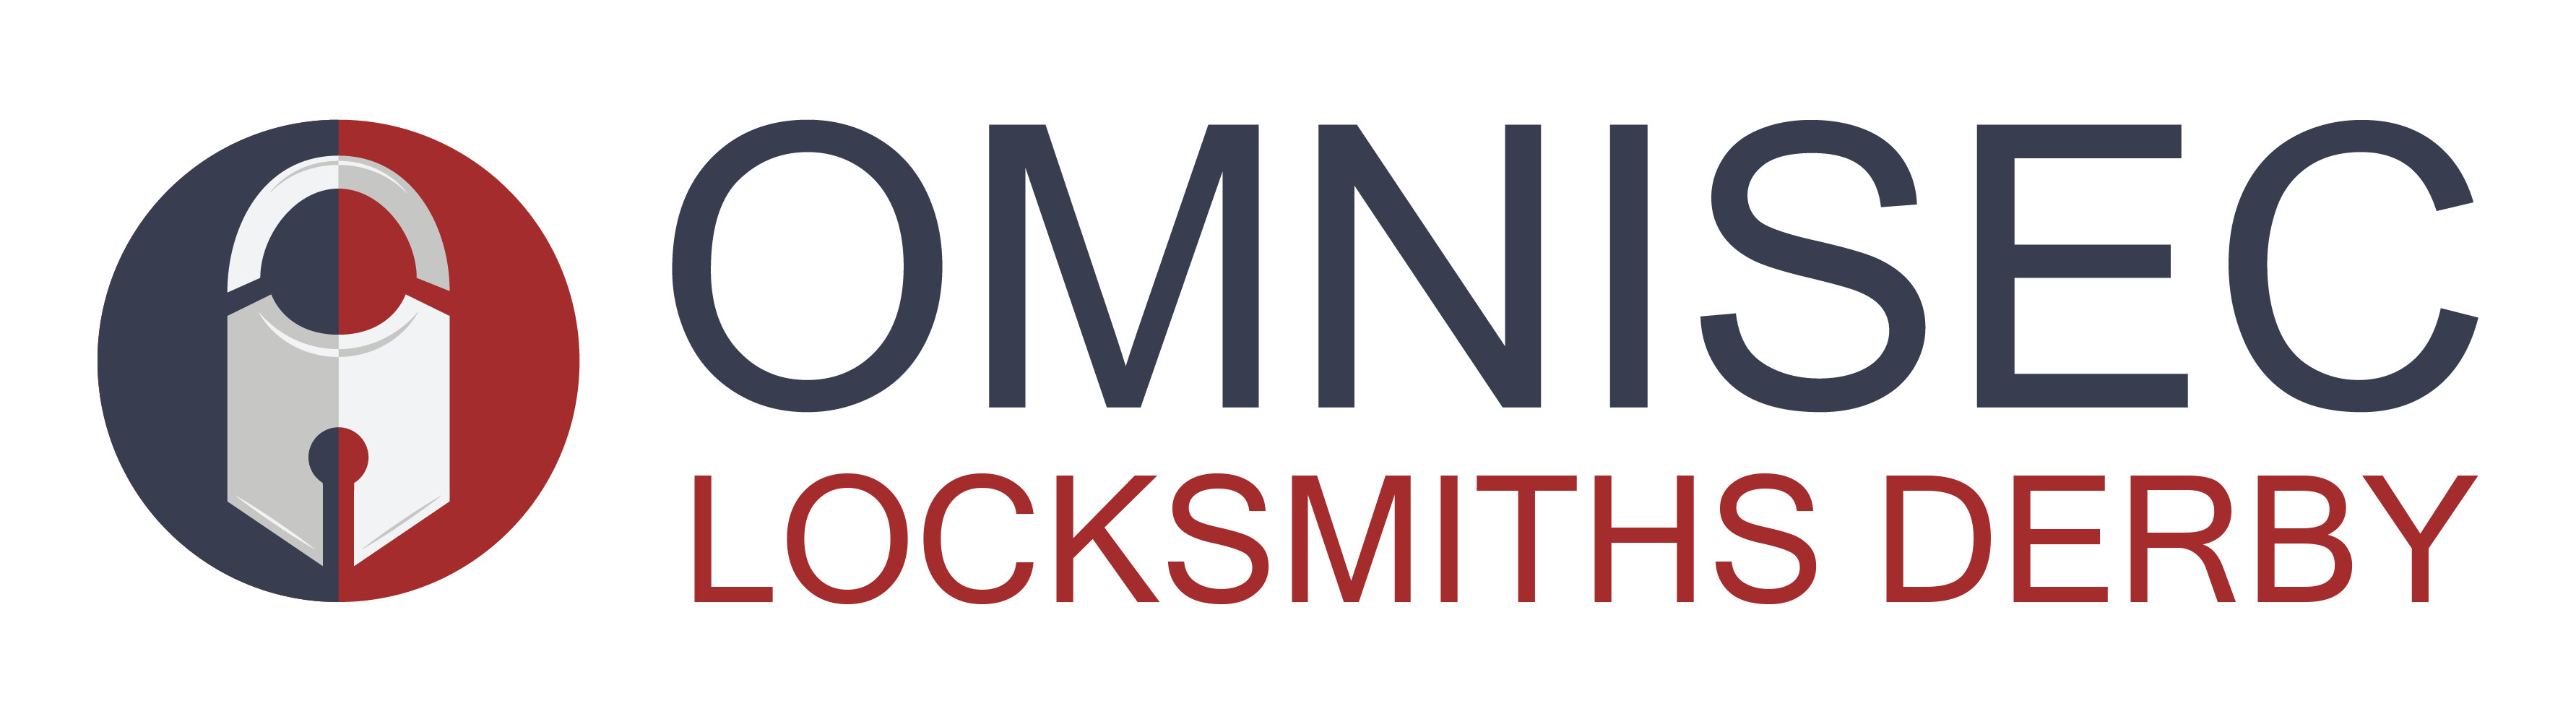 Omnisec Locksmiths Derby